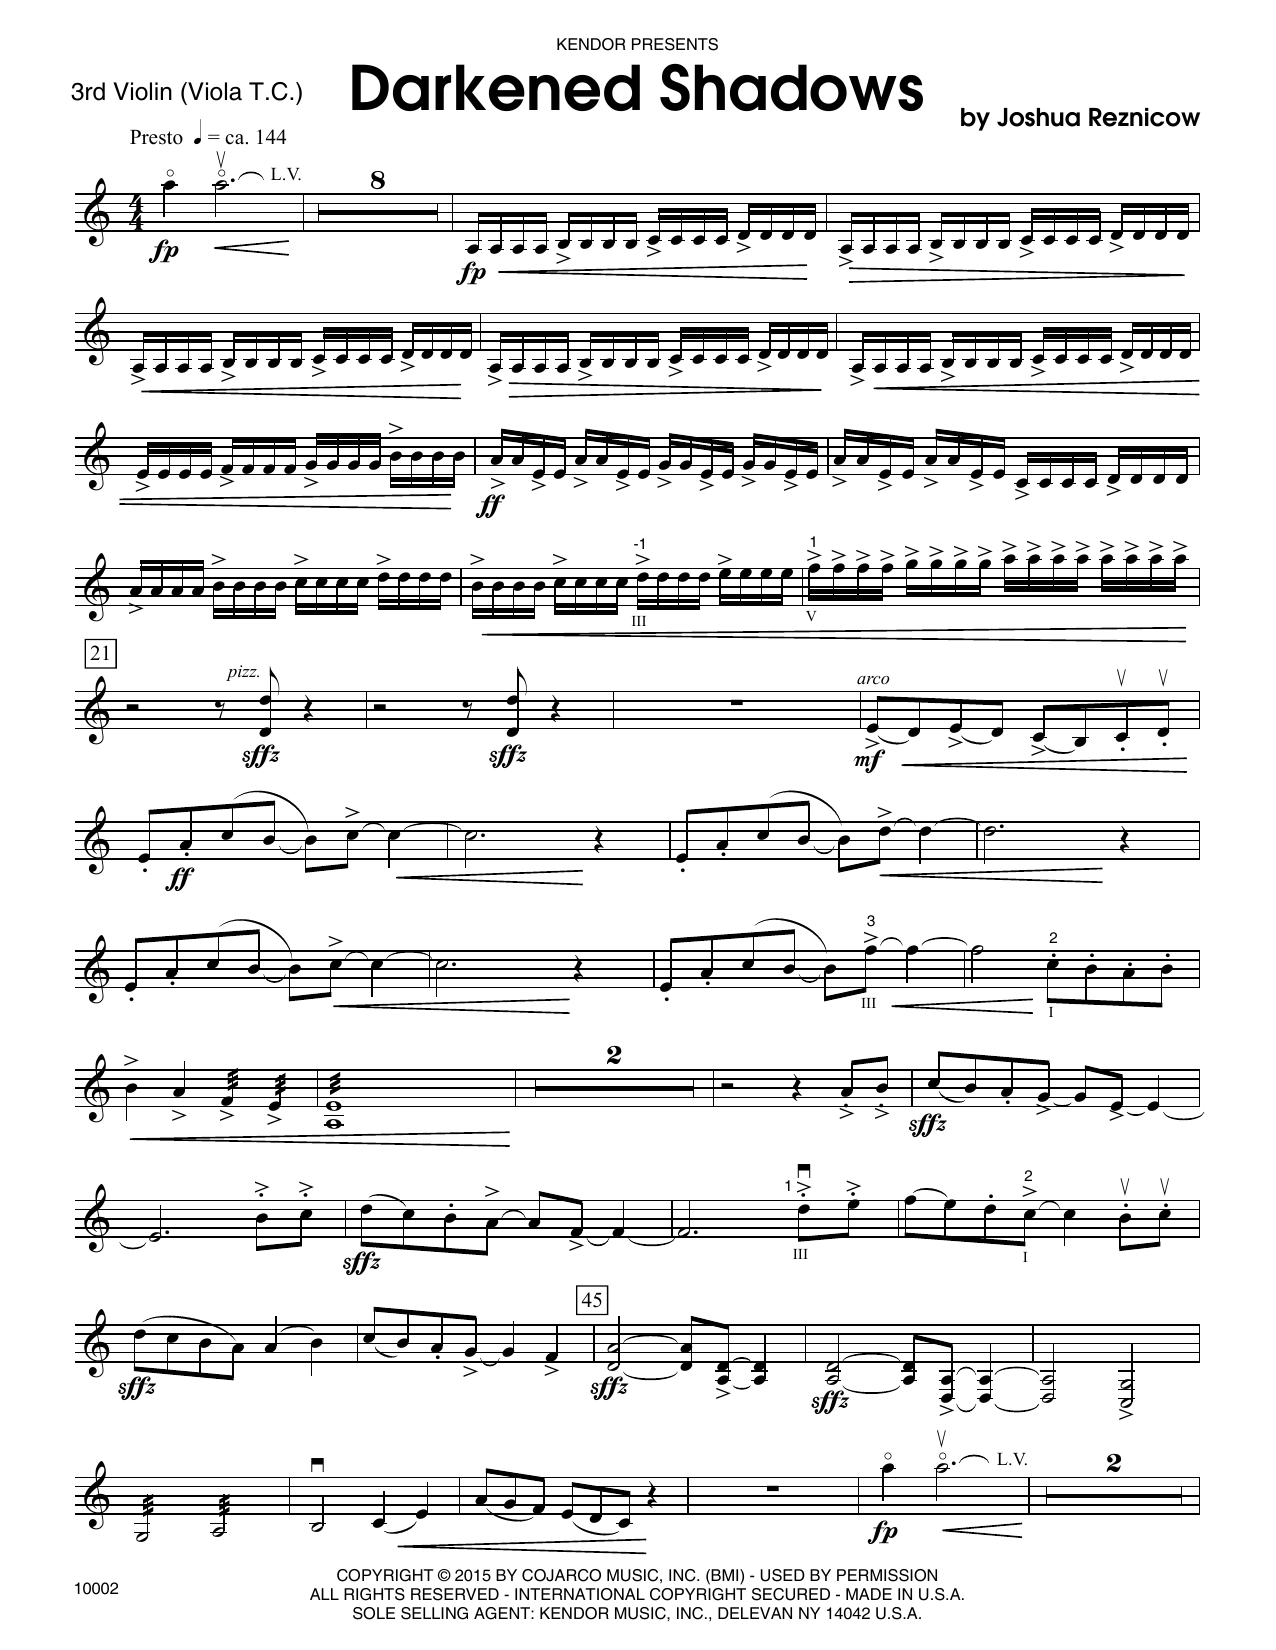 Download Joshue Reznicow Darkened Shadows - Violin 3 (Viola T.C. Sheet Music